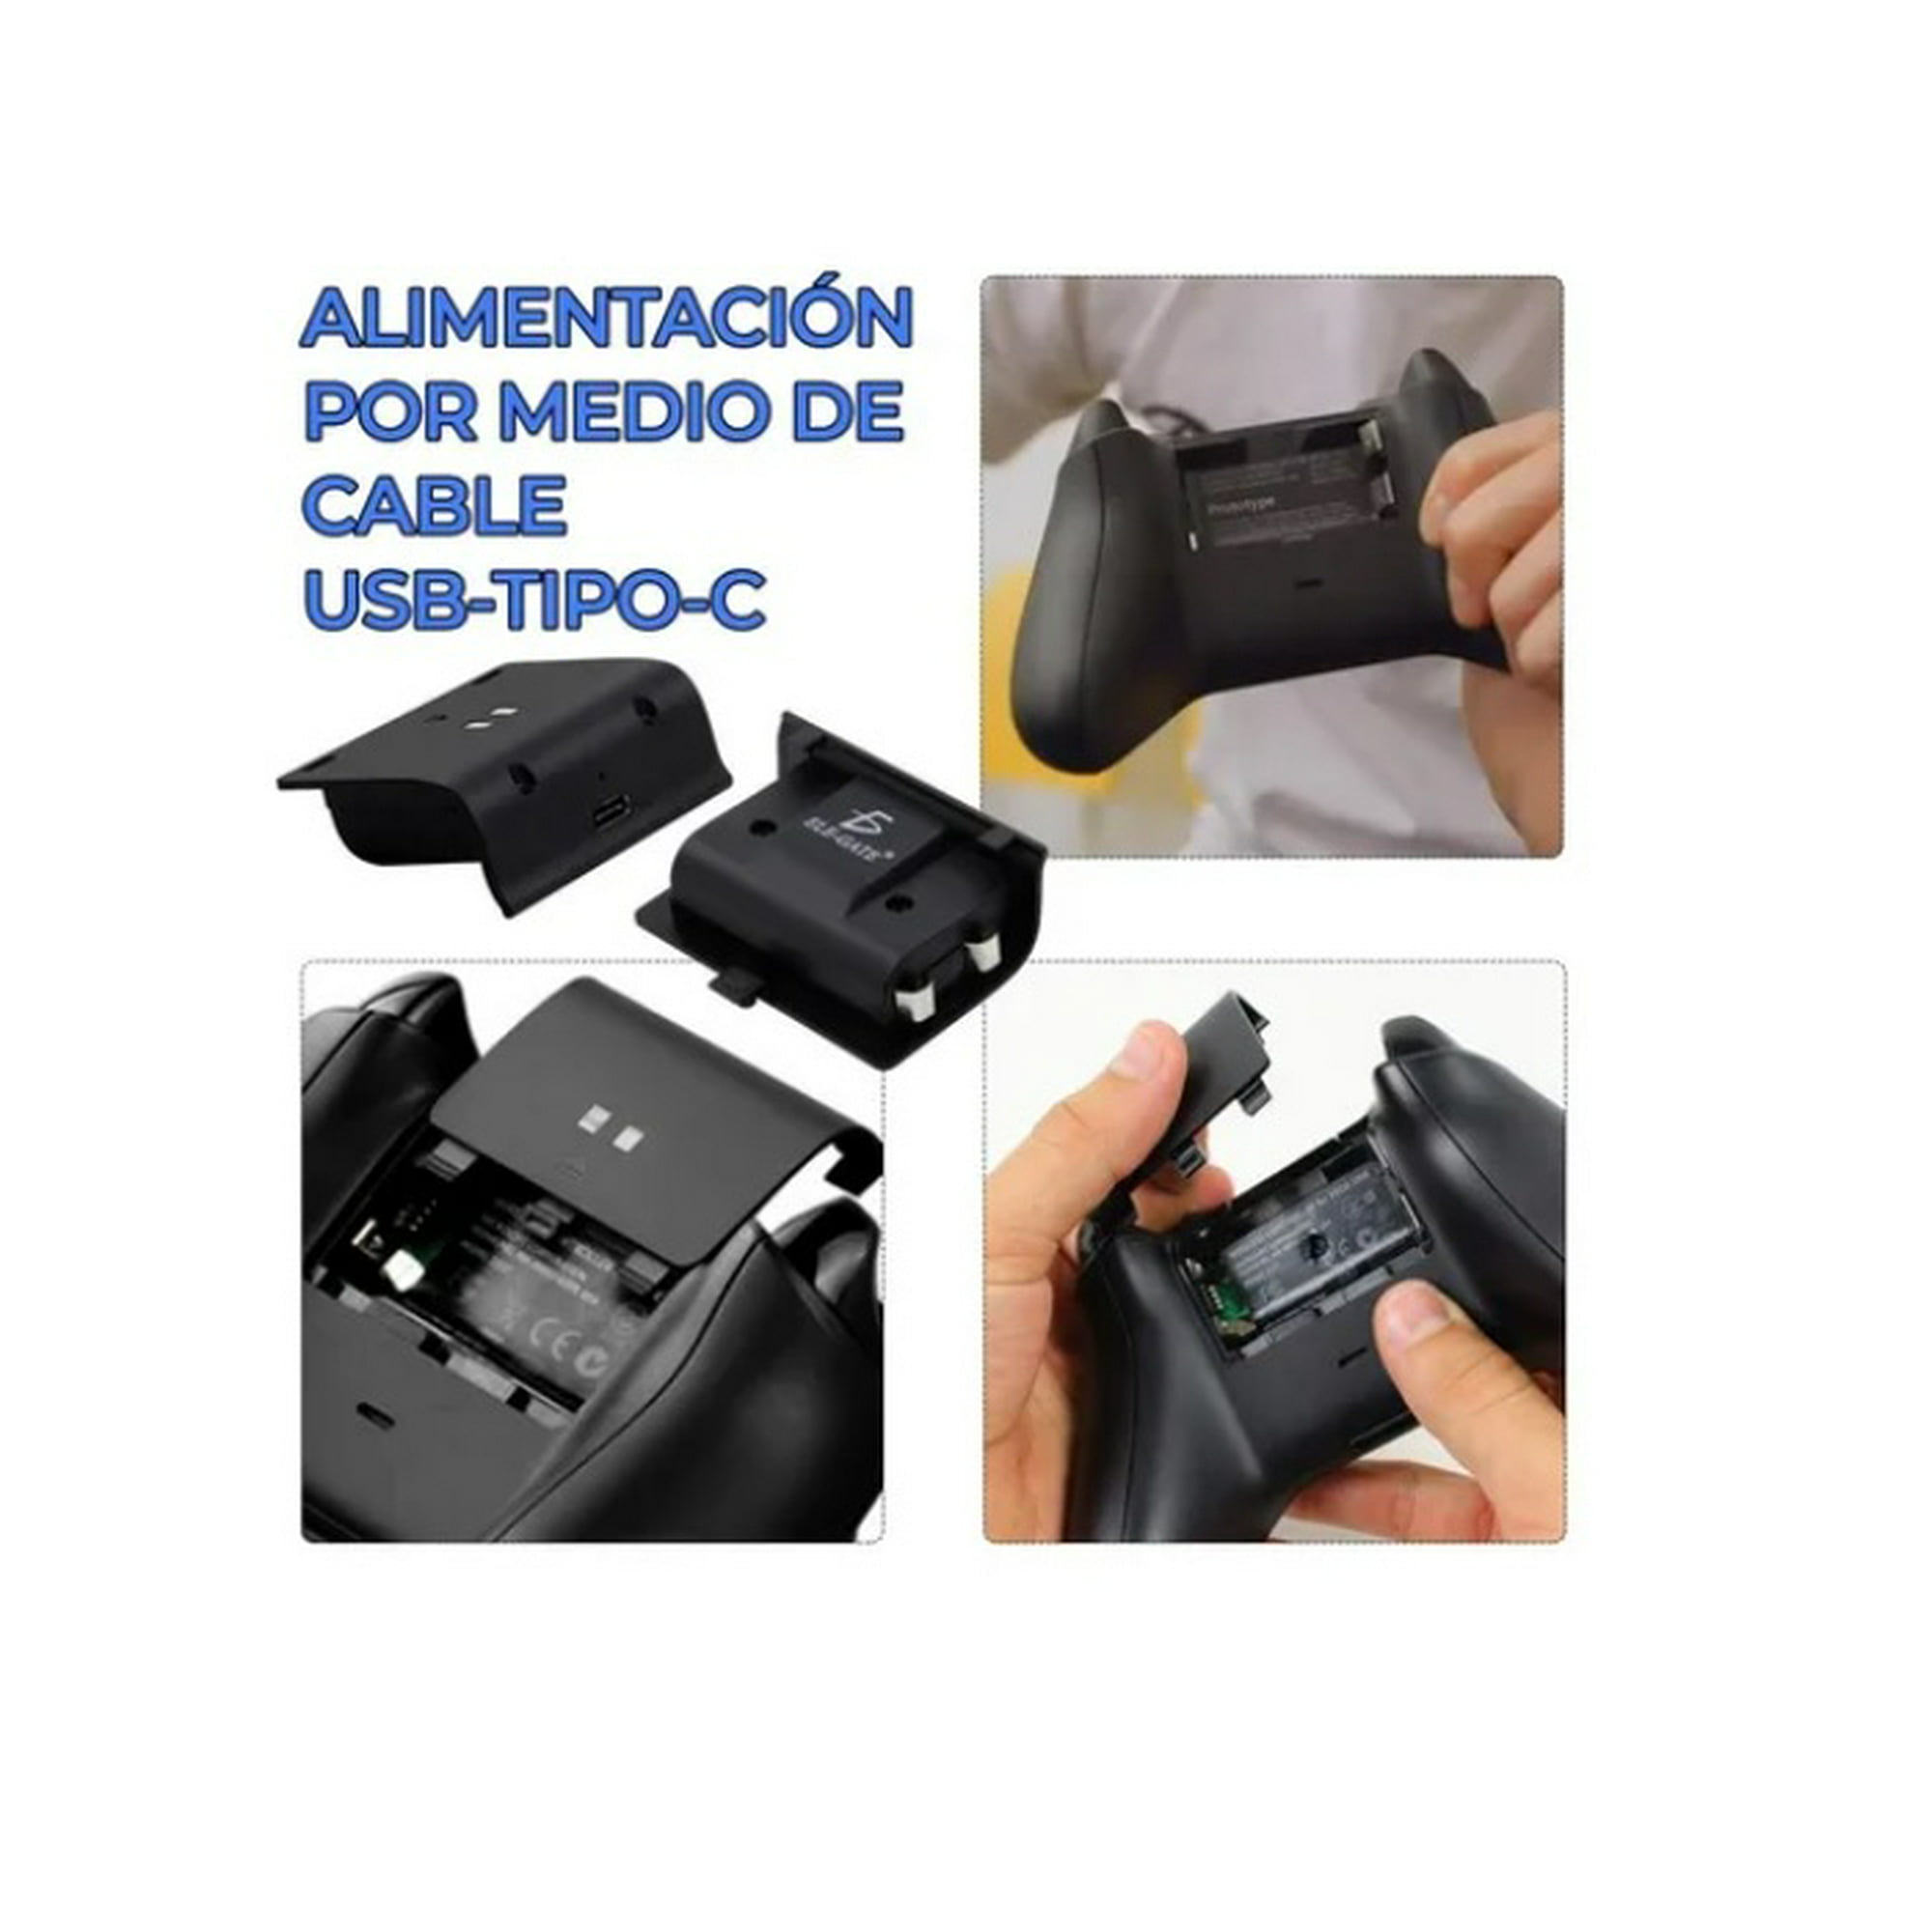 Batería Original Control Xbox Series Sx- Kit Carga Y Juega - Power-Play